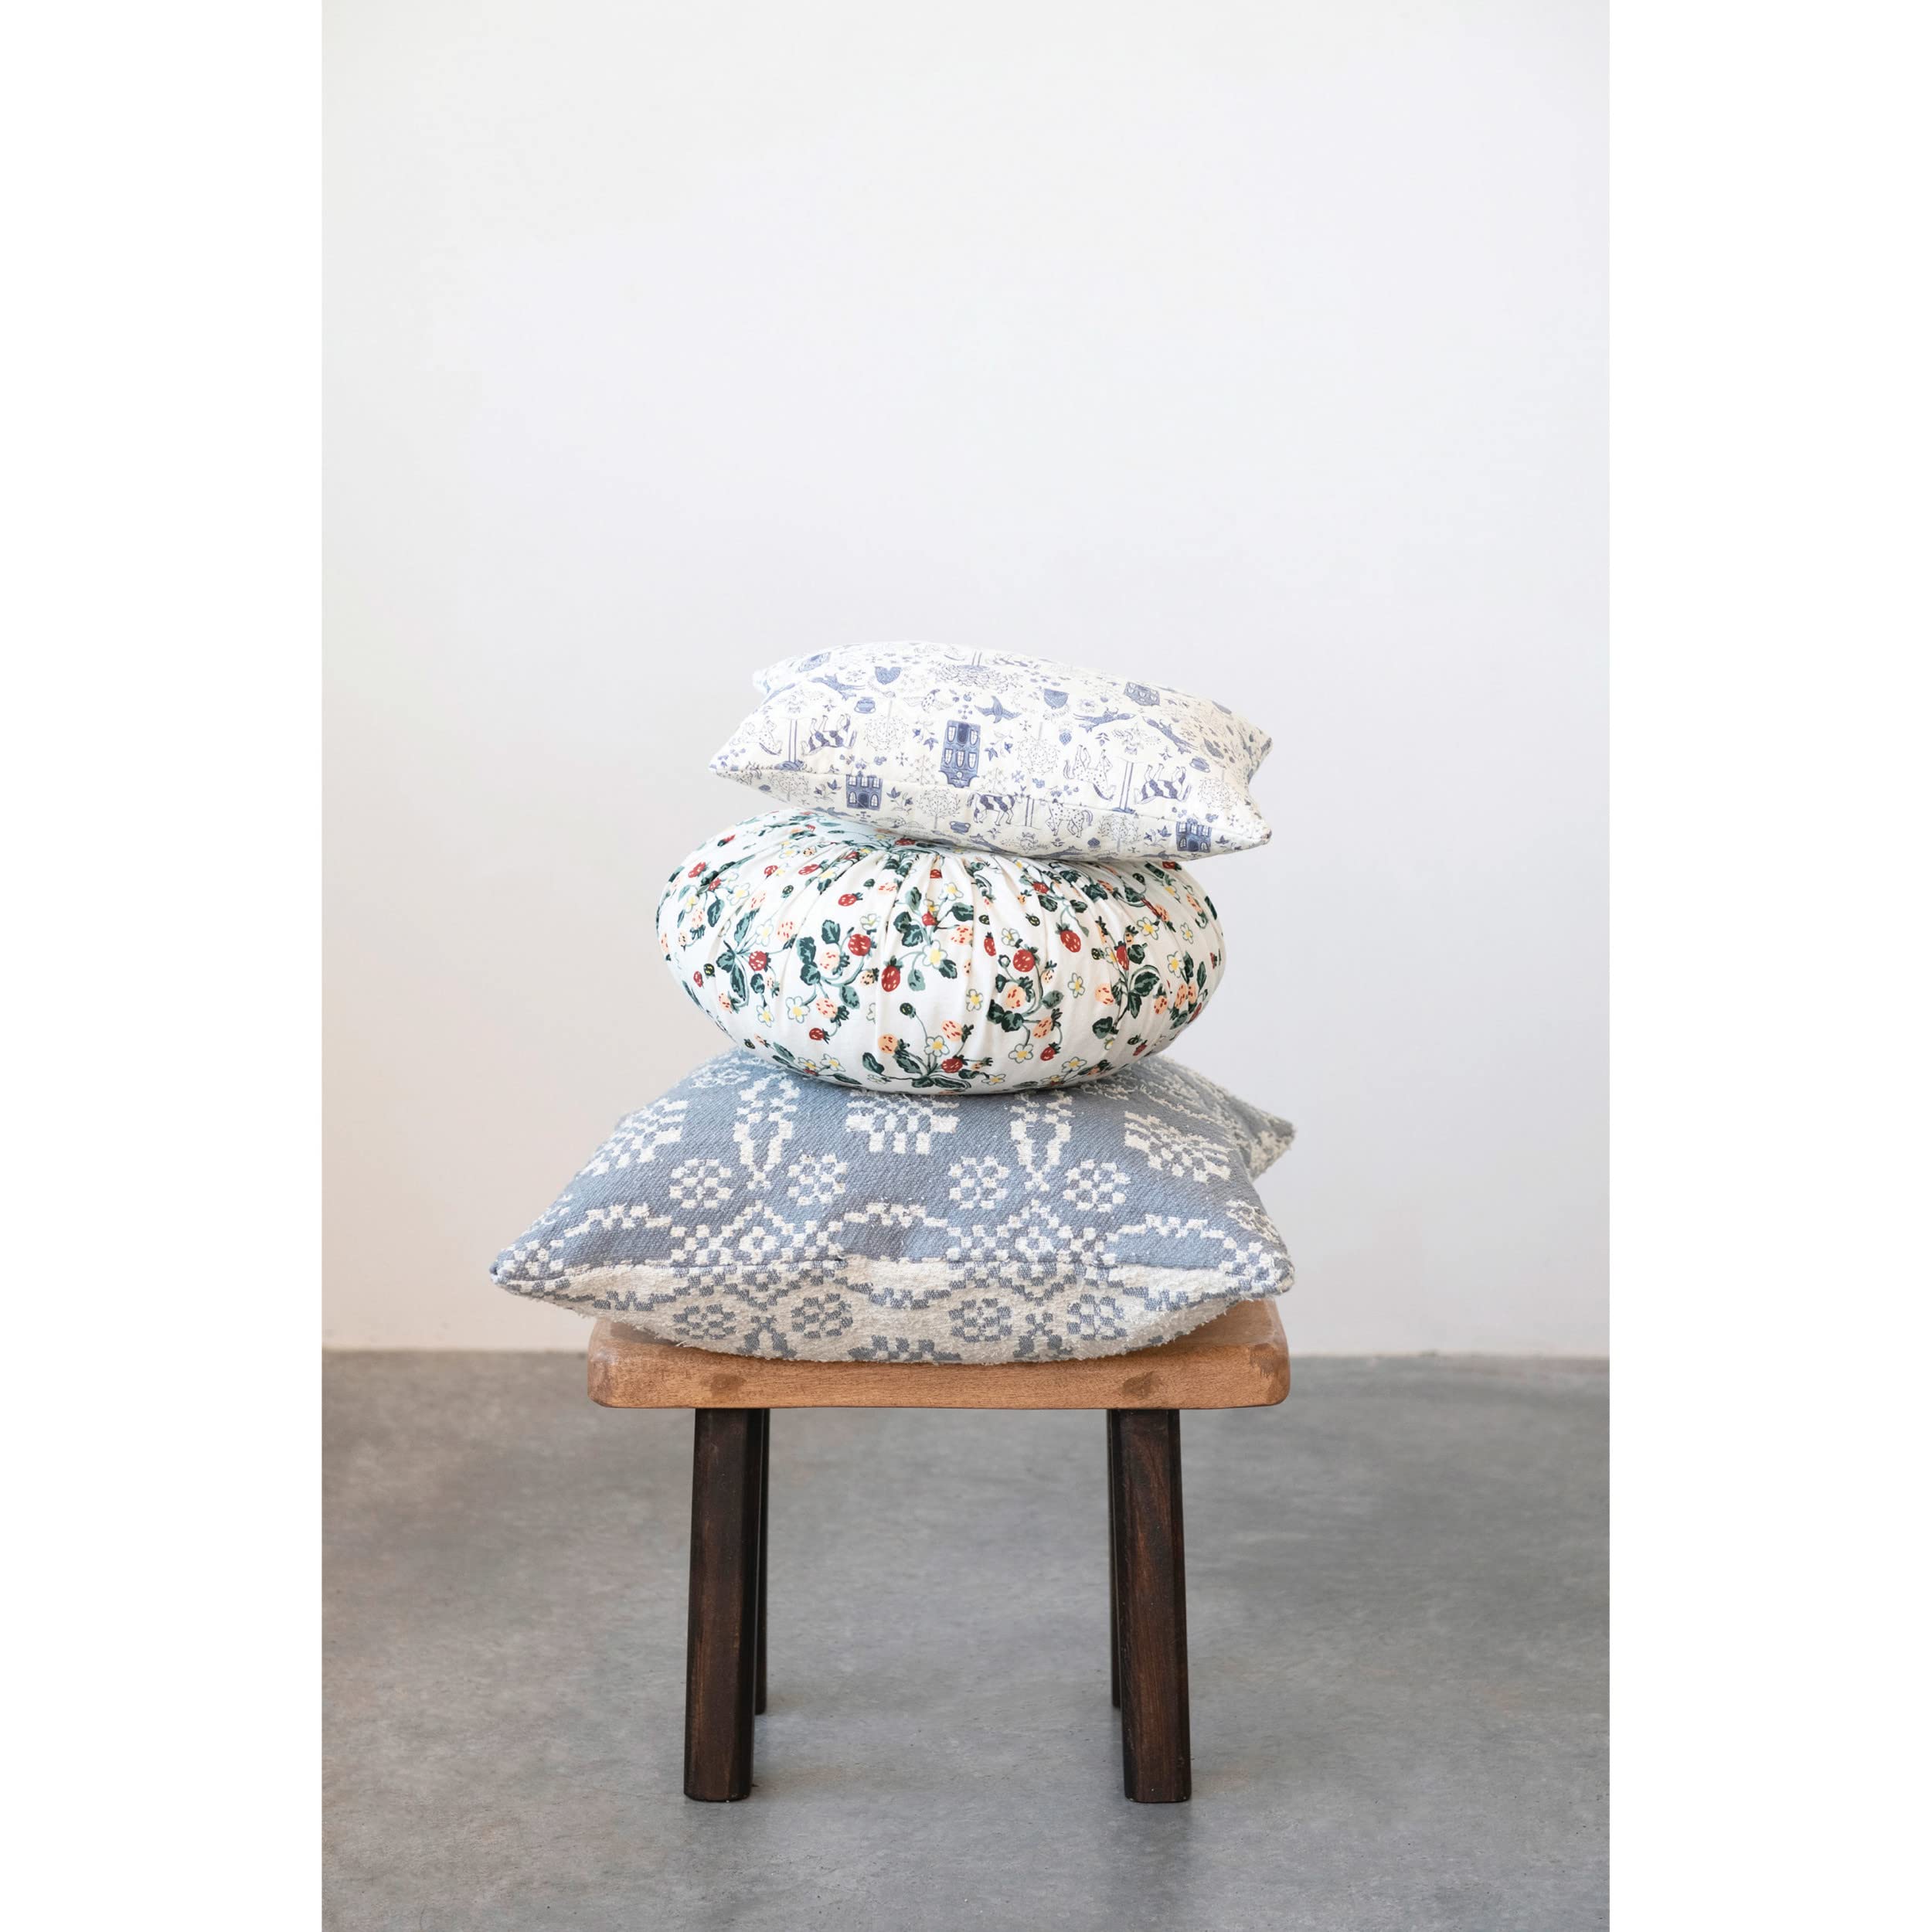 Creative Co-Op Woven Cotton Jacquard Pillow, 20" L x 20" W x 0" H, Greige